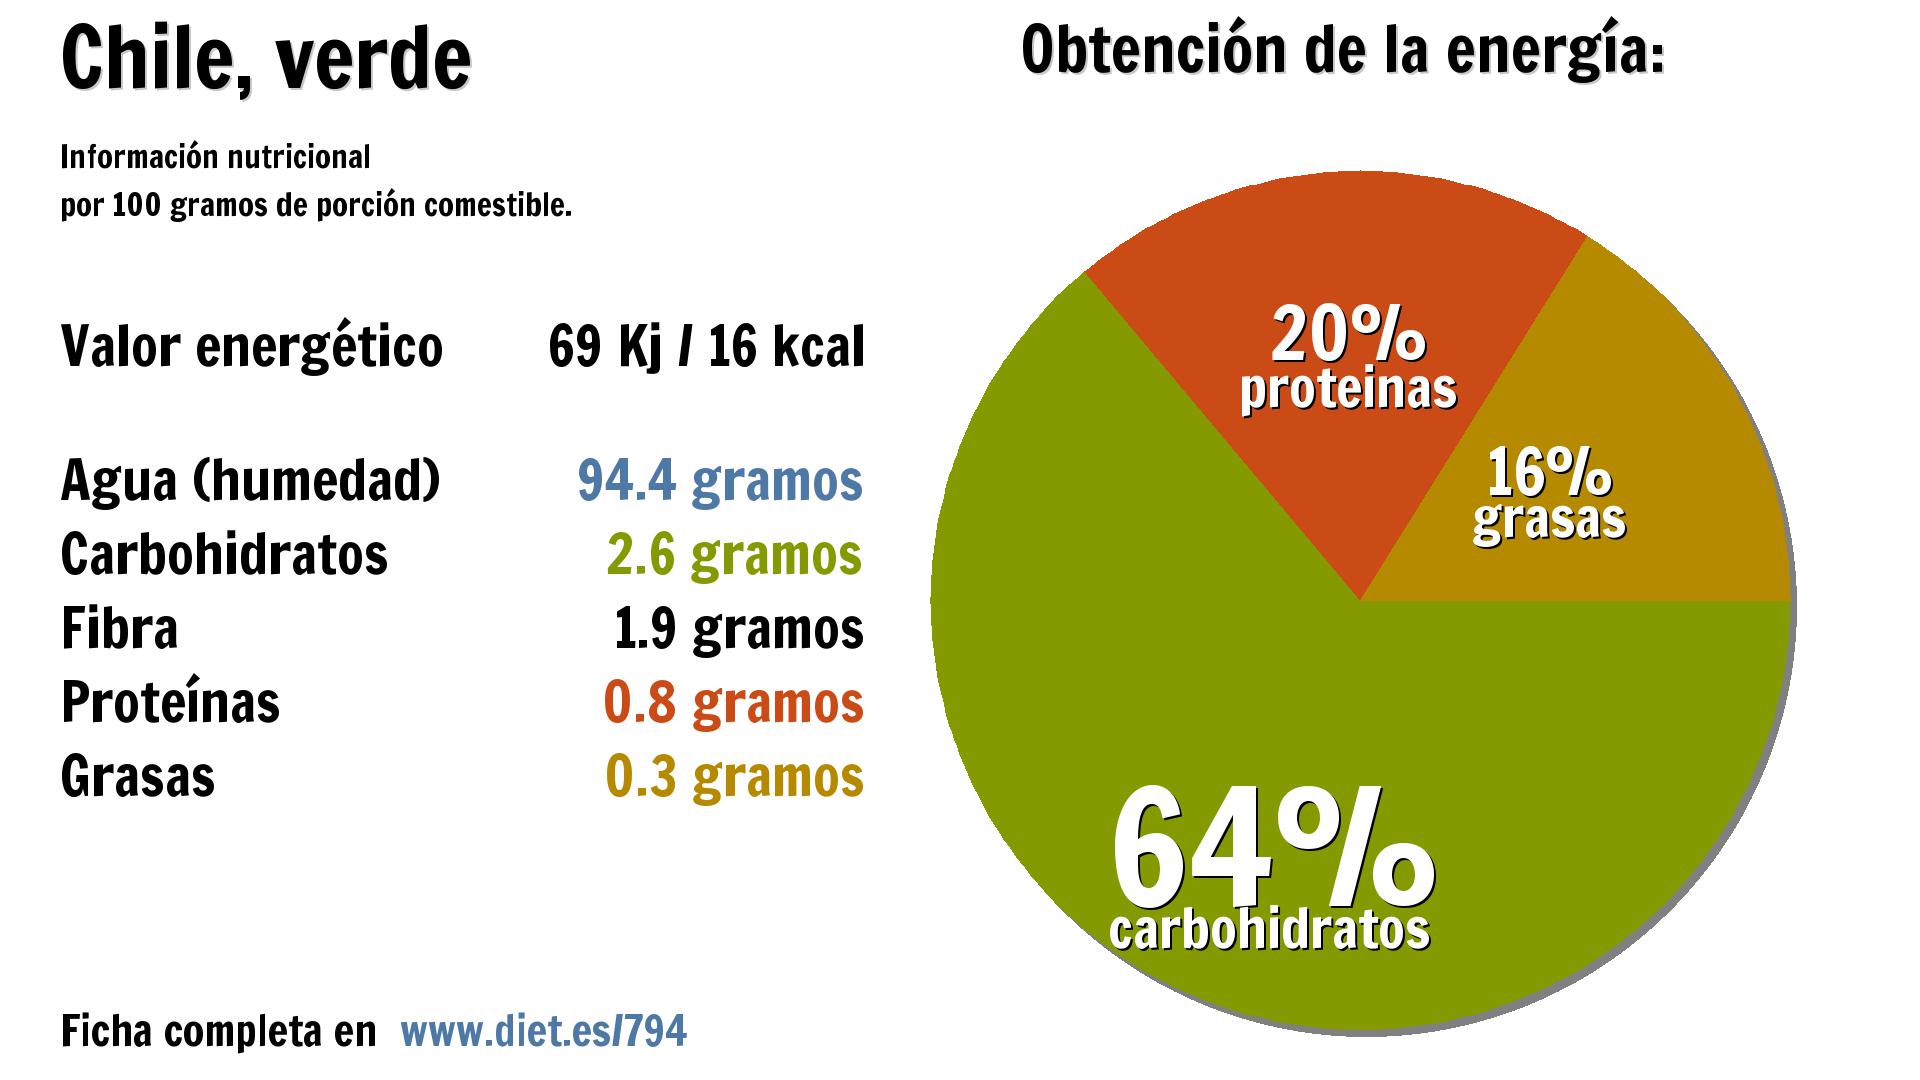 Chile, verde: agua 94 g., energía 69 Kj, carbohidratos 3 g., fibra 2 g. y proteínas 1 g.